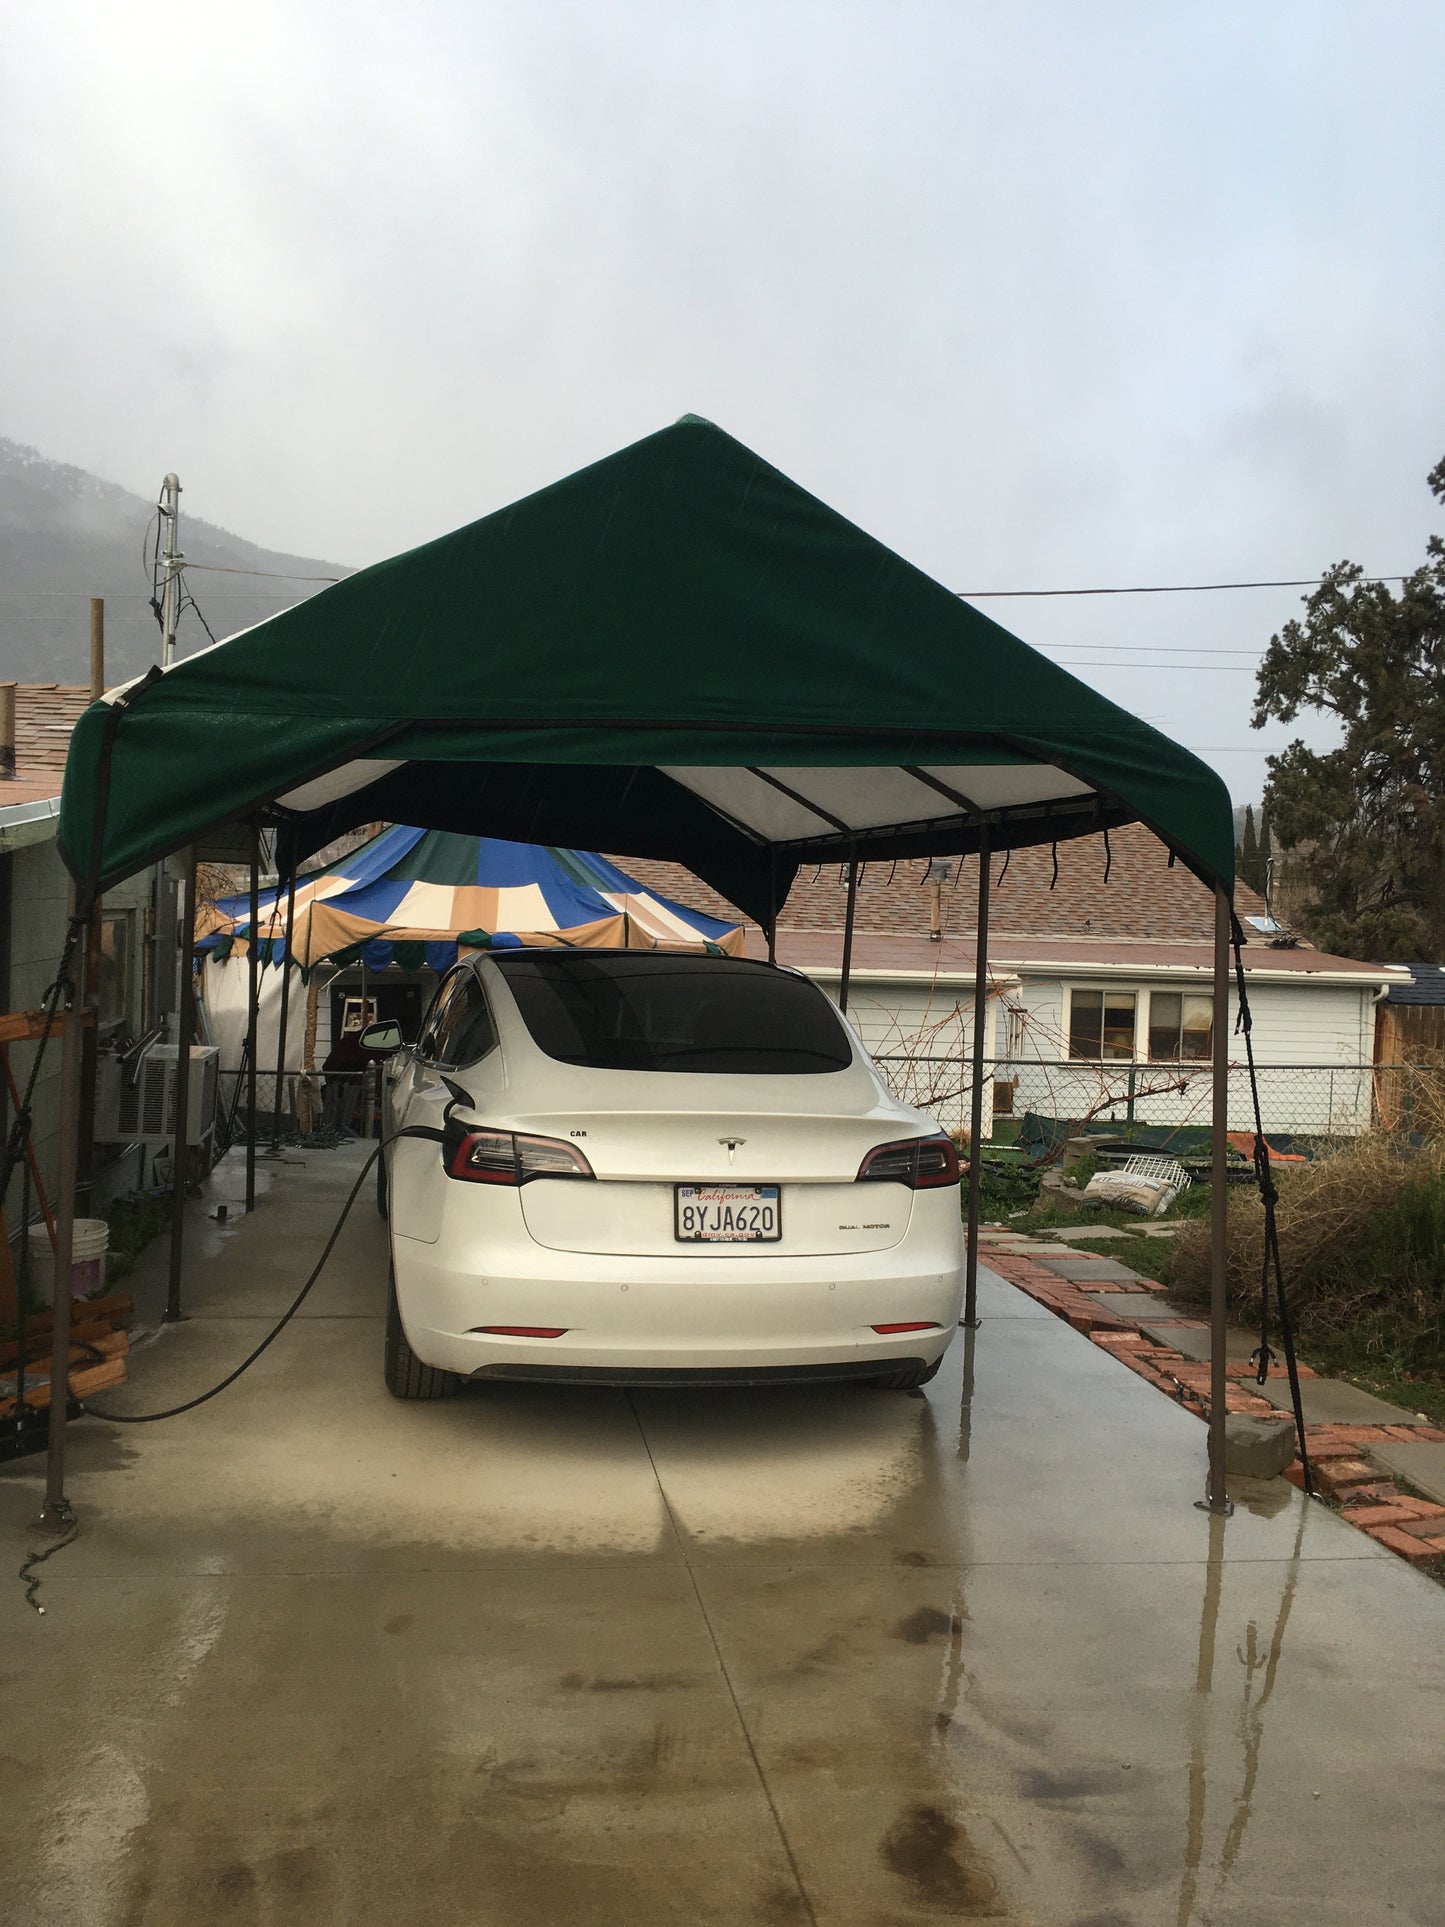 Sunbrella Carport replacement roof fits standard 10'x20' systems